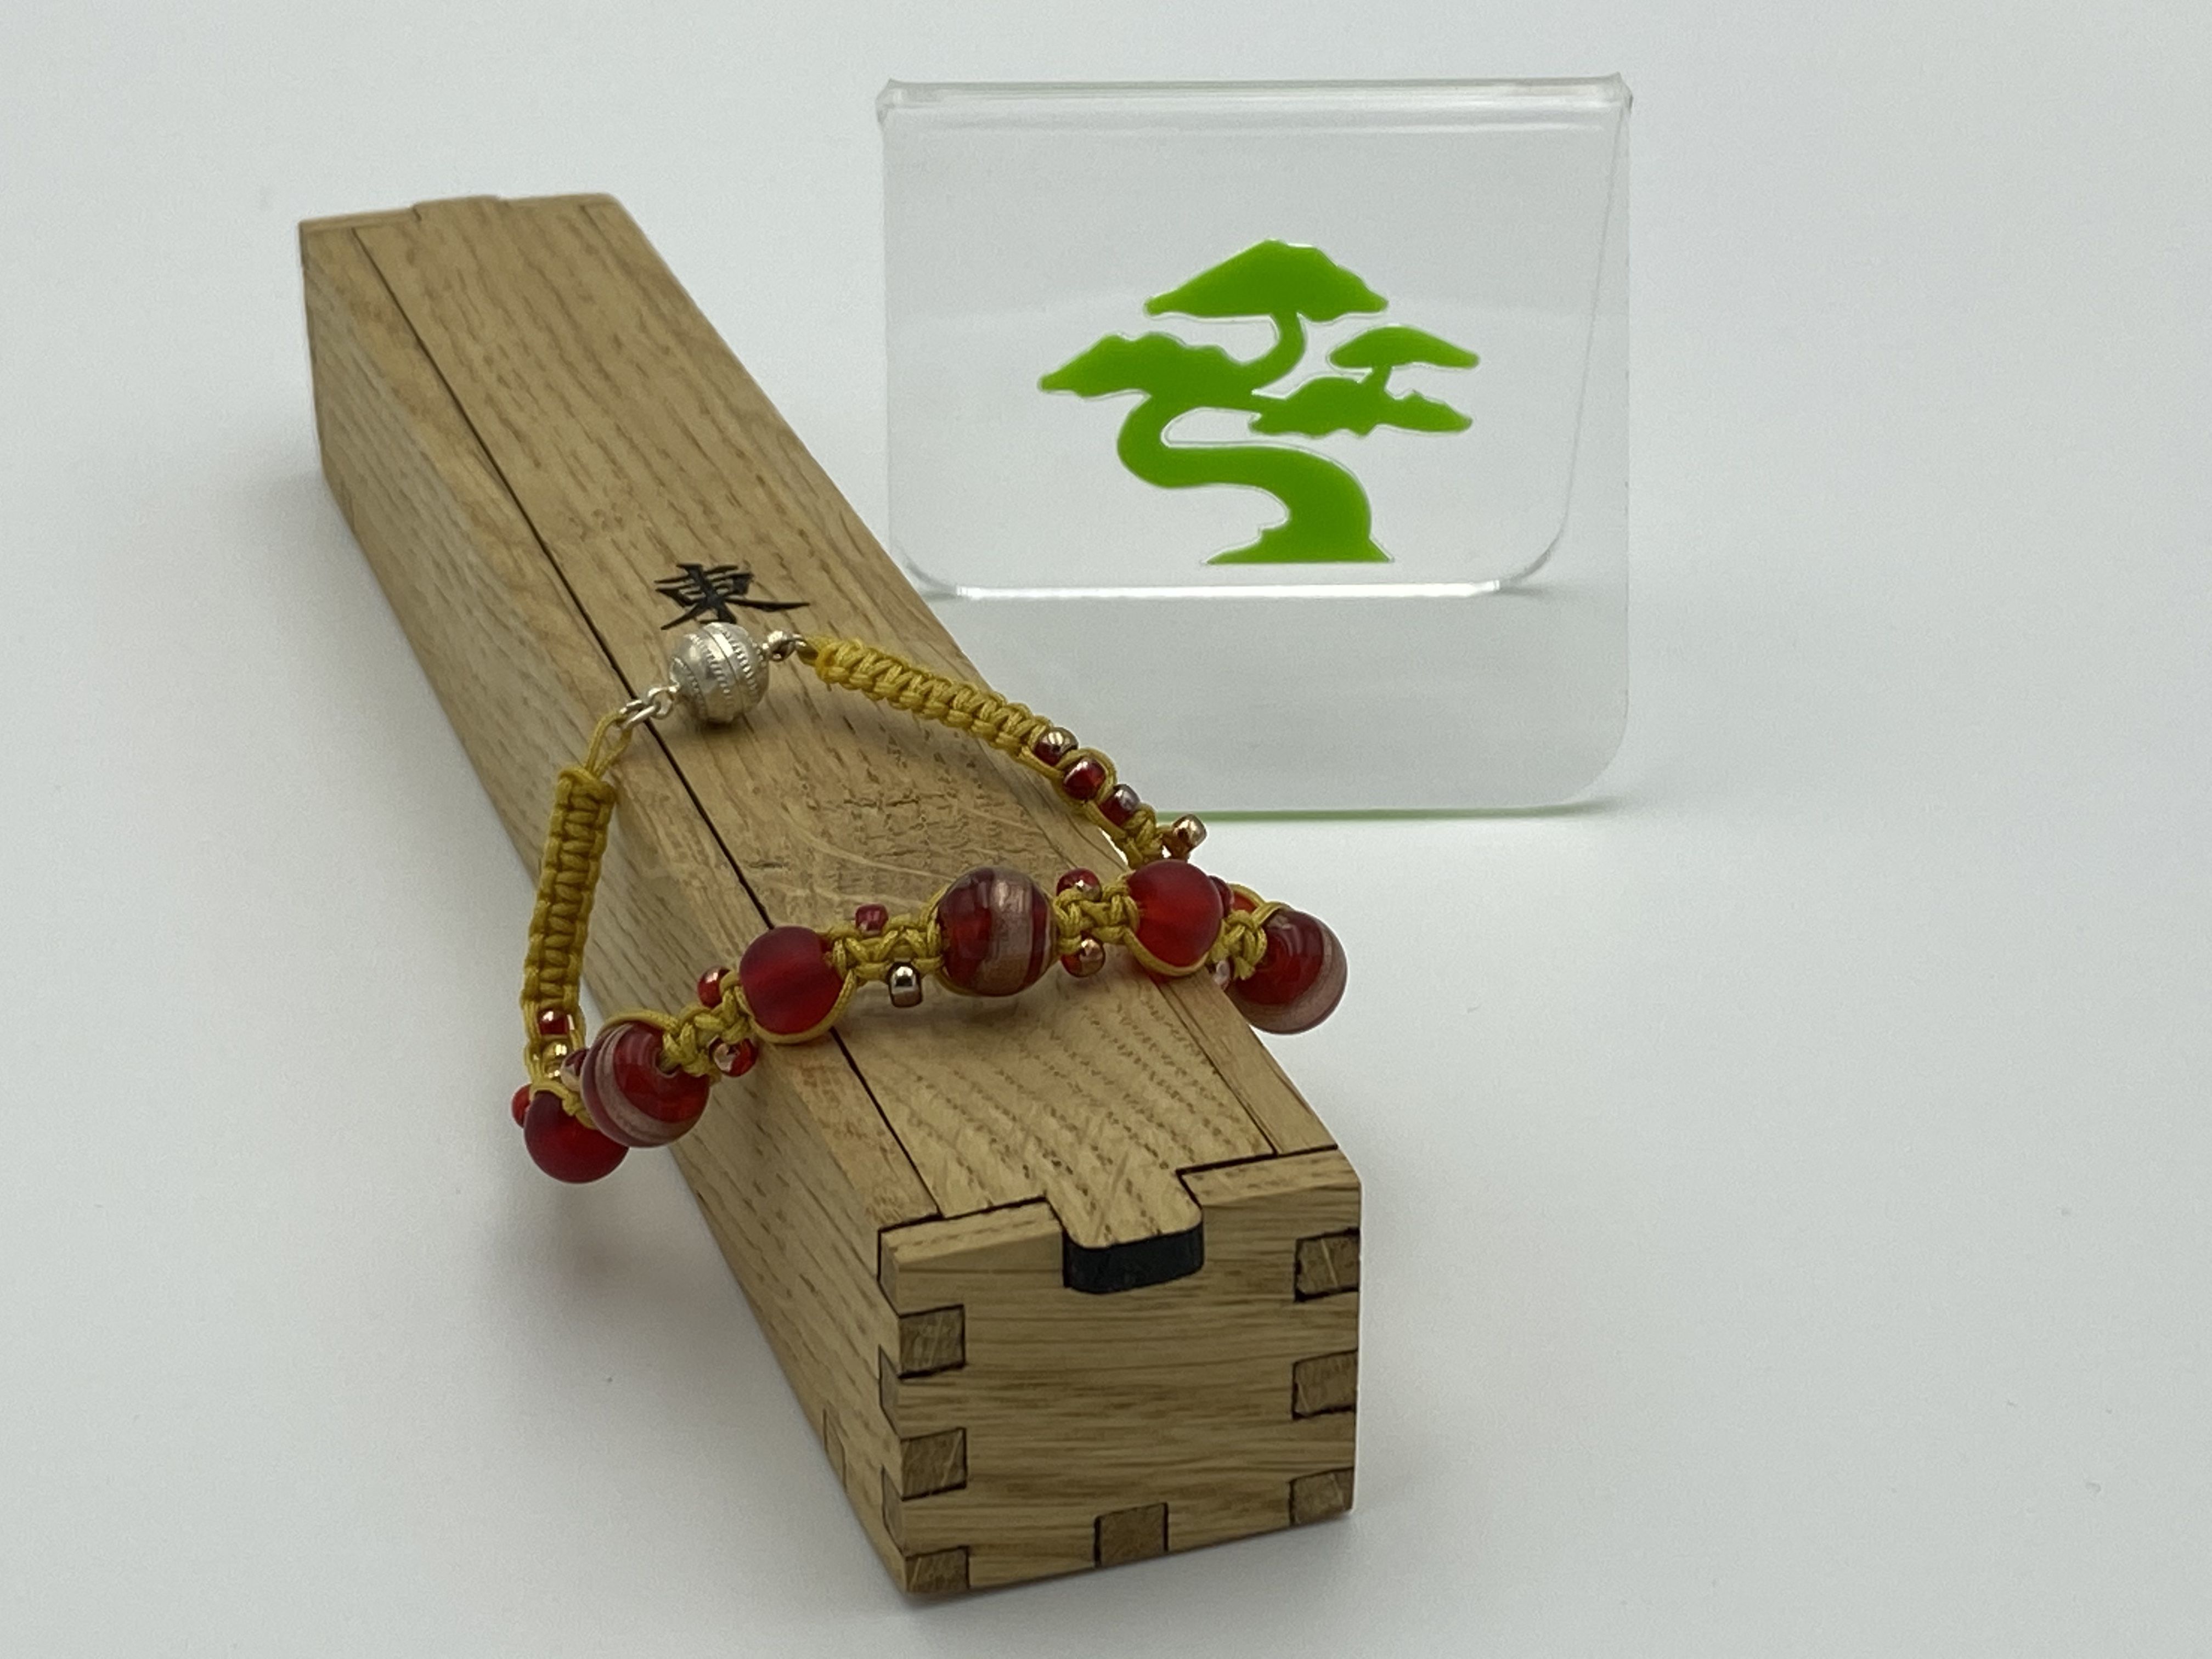 Chinese Knot Bracelet - Flat Knot Bracelet (Woven & Braided Bracelet) - Includes a Wooden Presentation Box